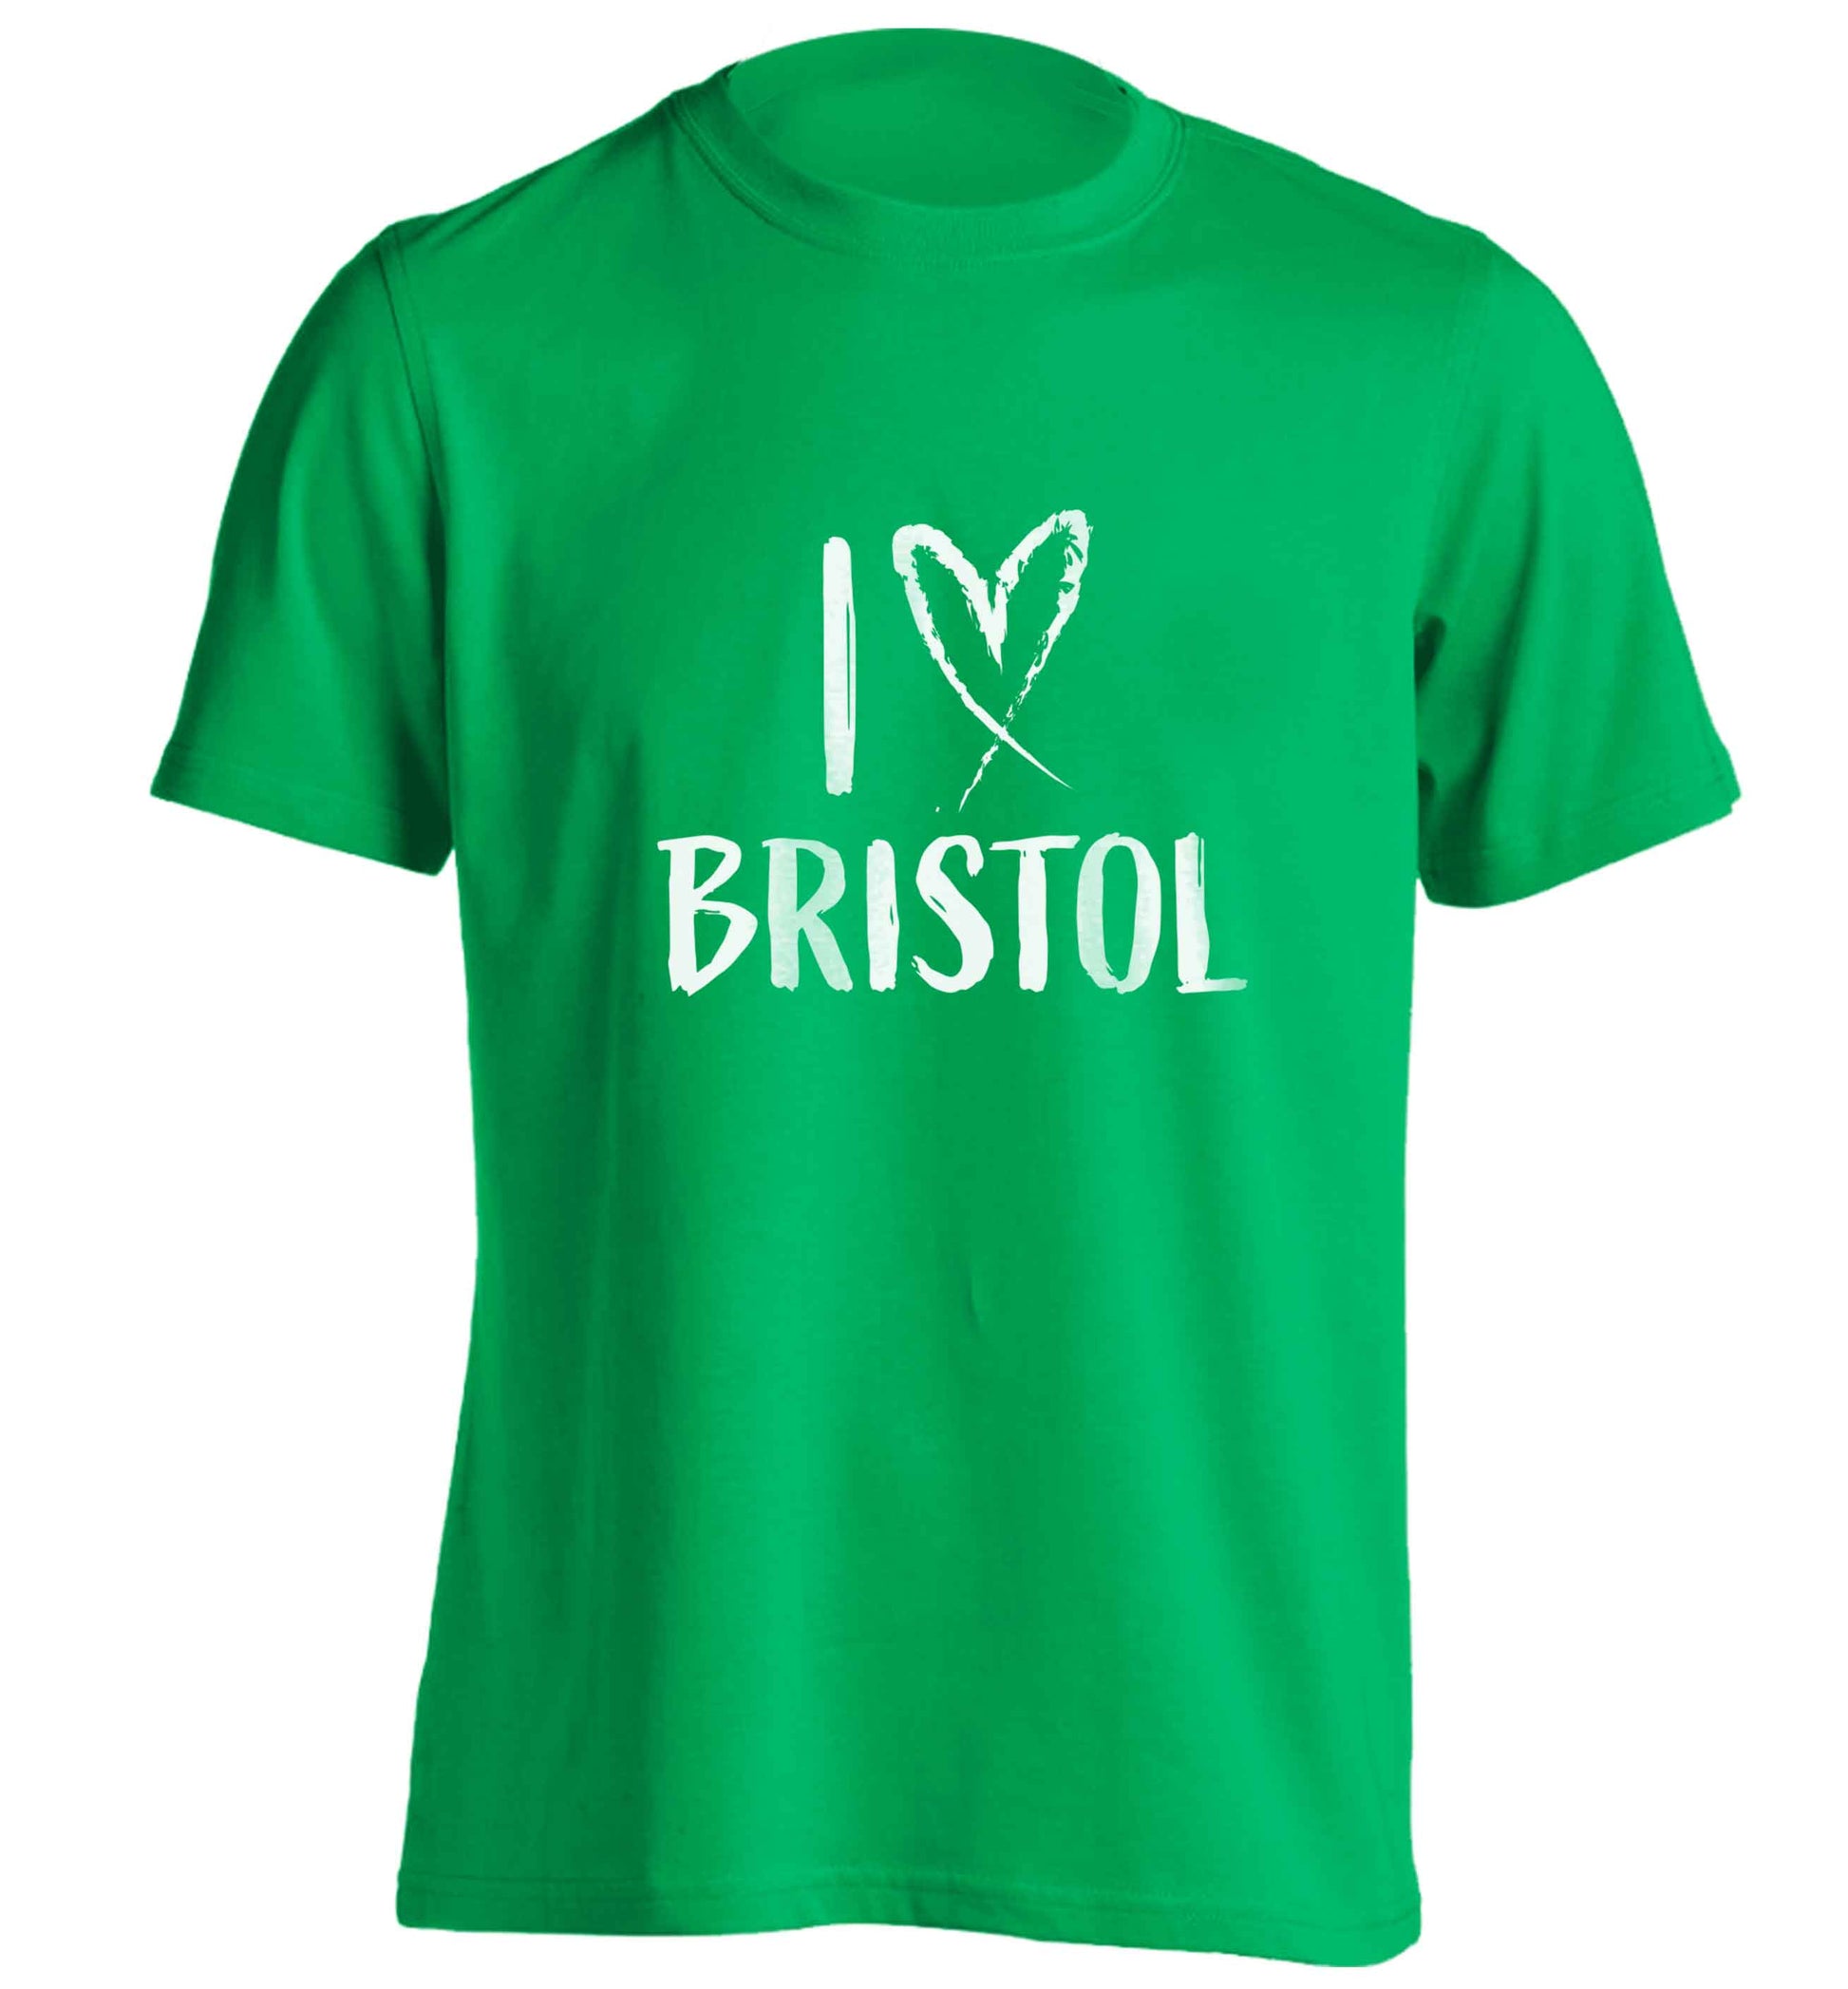 I love Bristol adults unisex green Tshirt 2XL